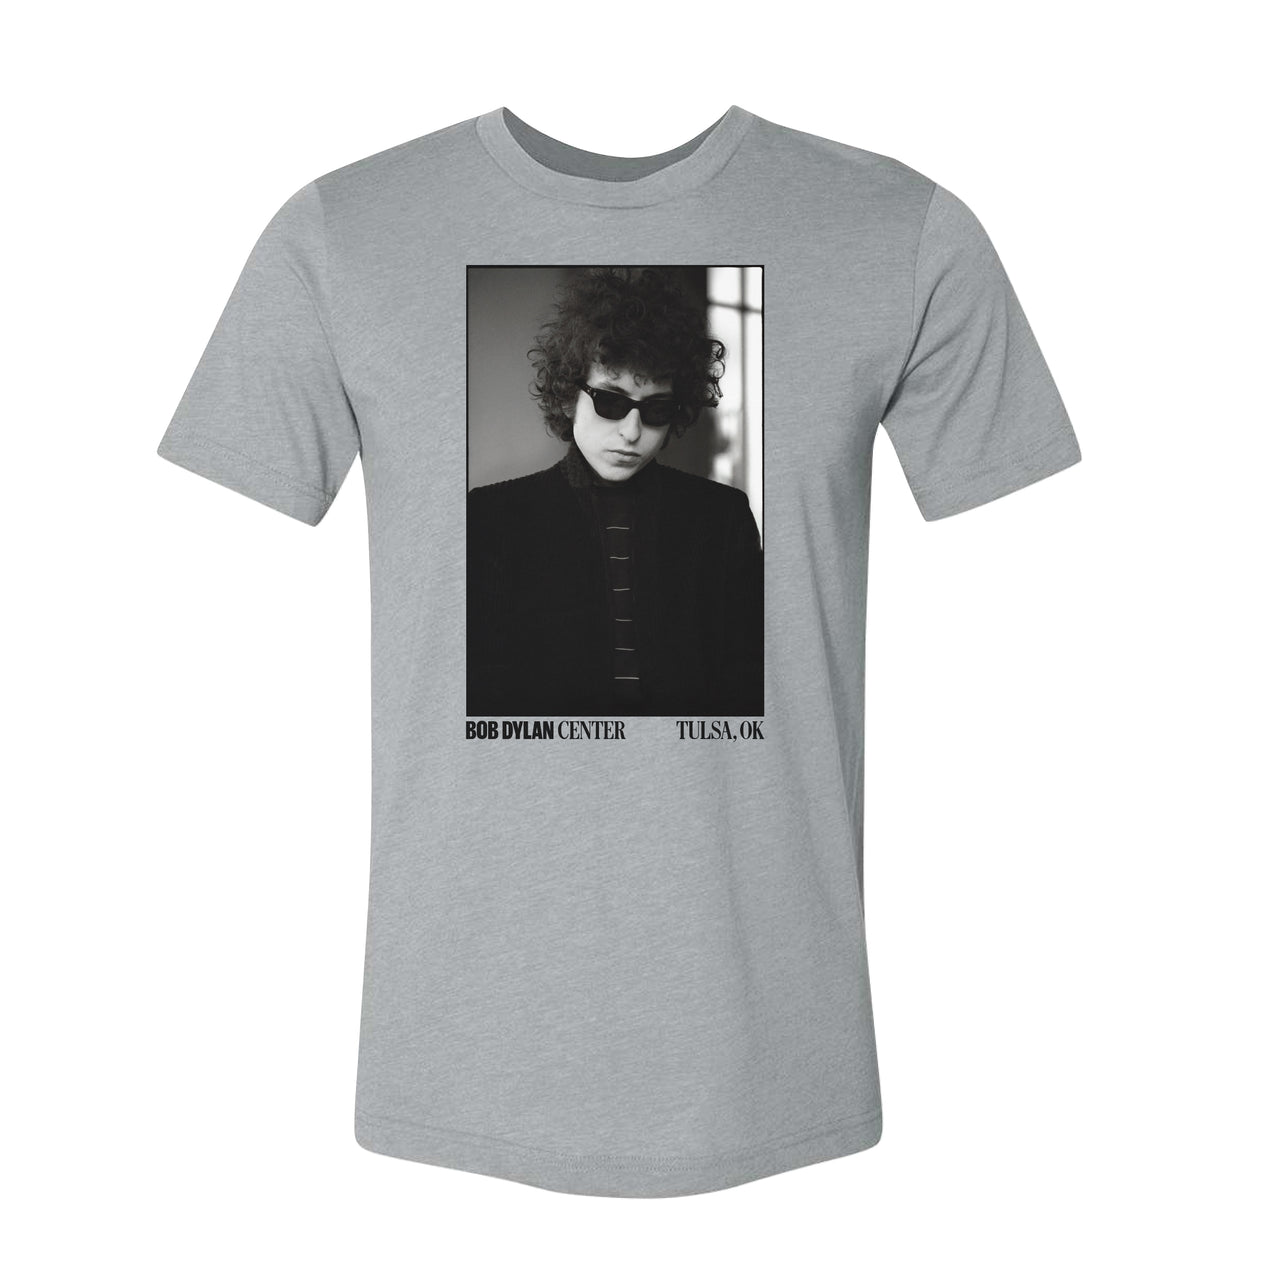 Bob Dylan by Lisa Law Shirt